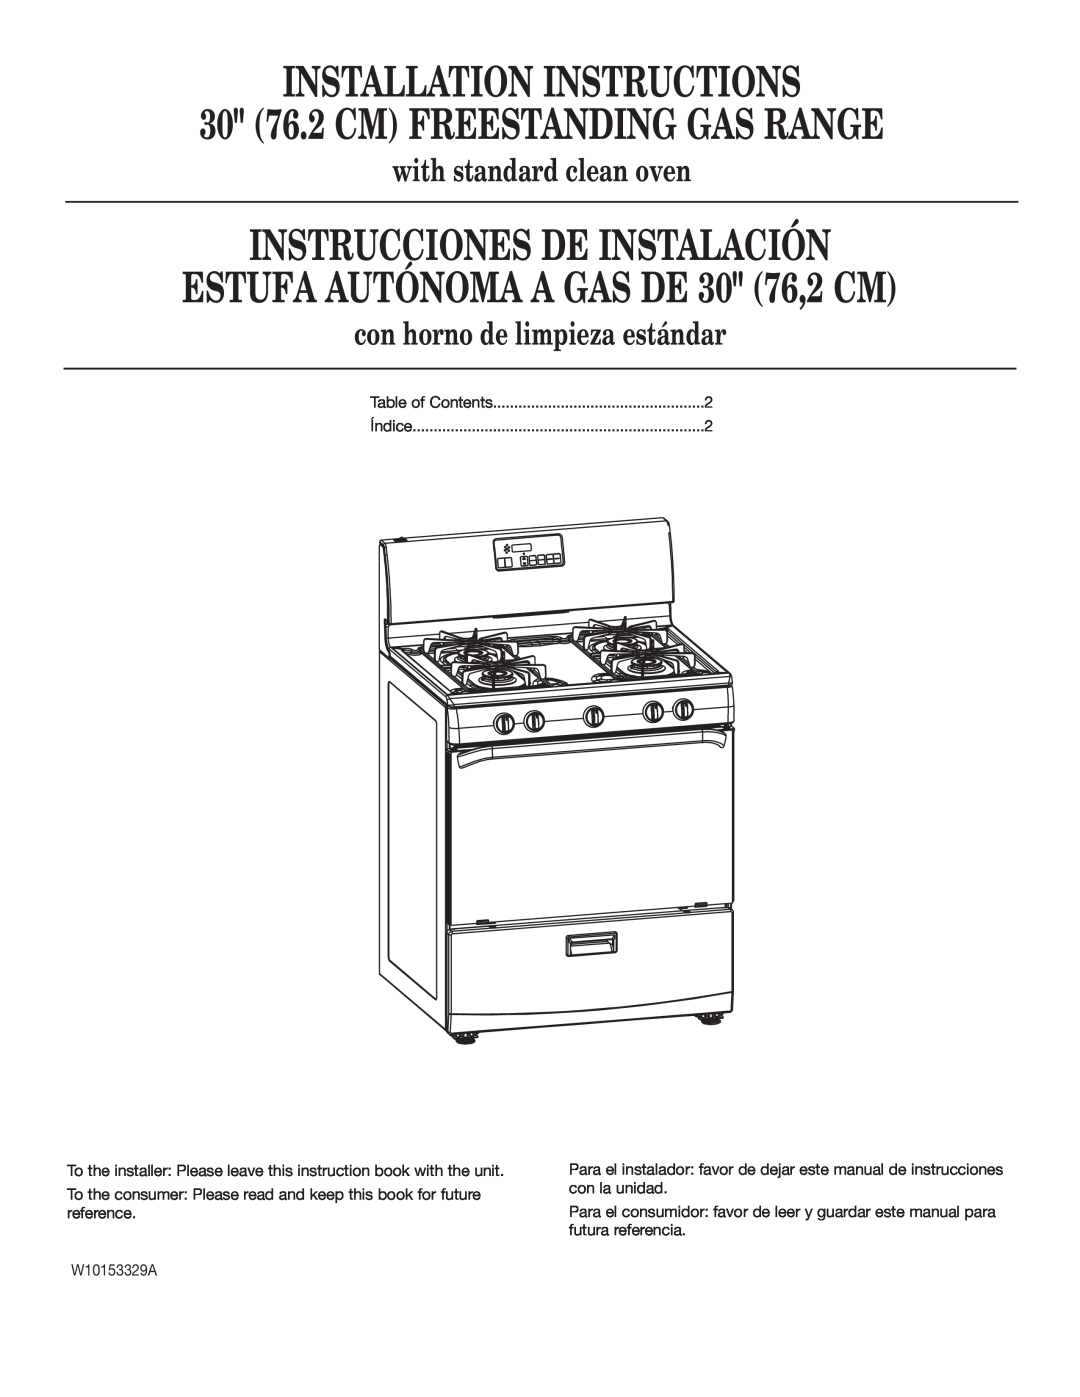 Whirlpool W10153329A installation instructions with standard clean oven, con horno de limpieza estándar 